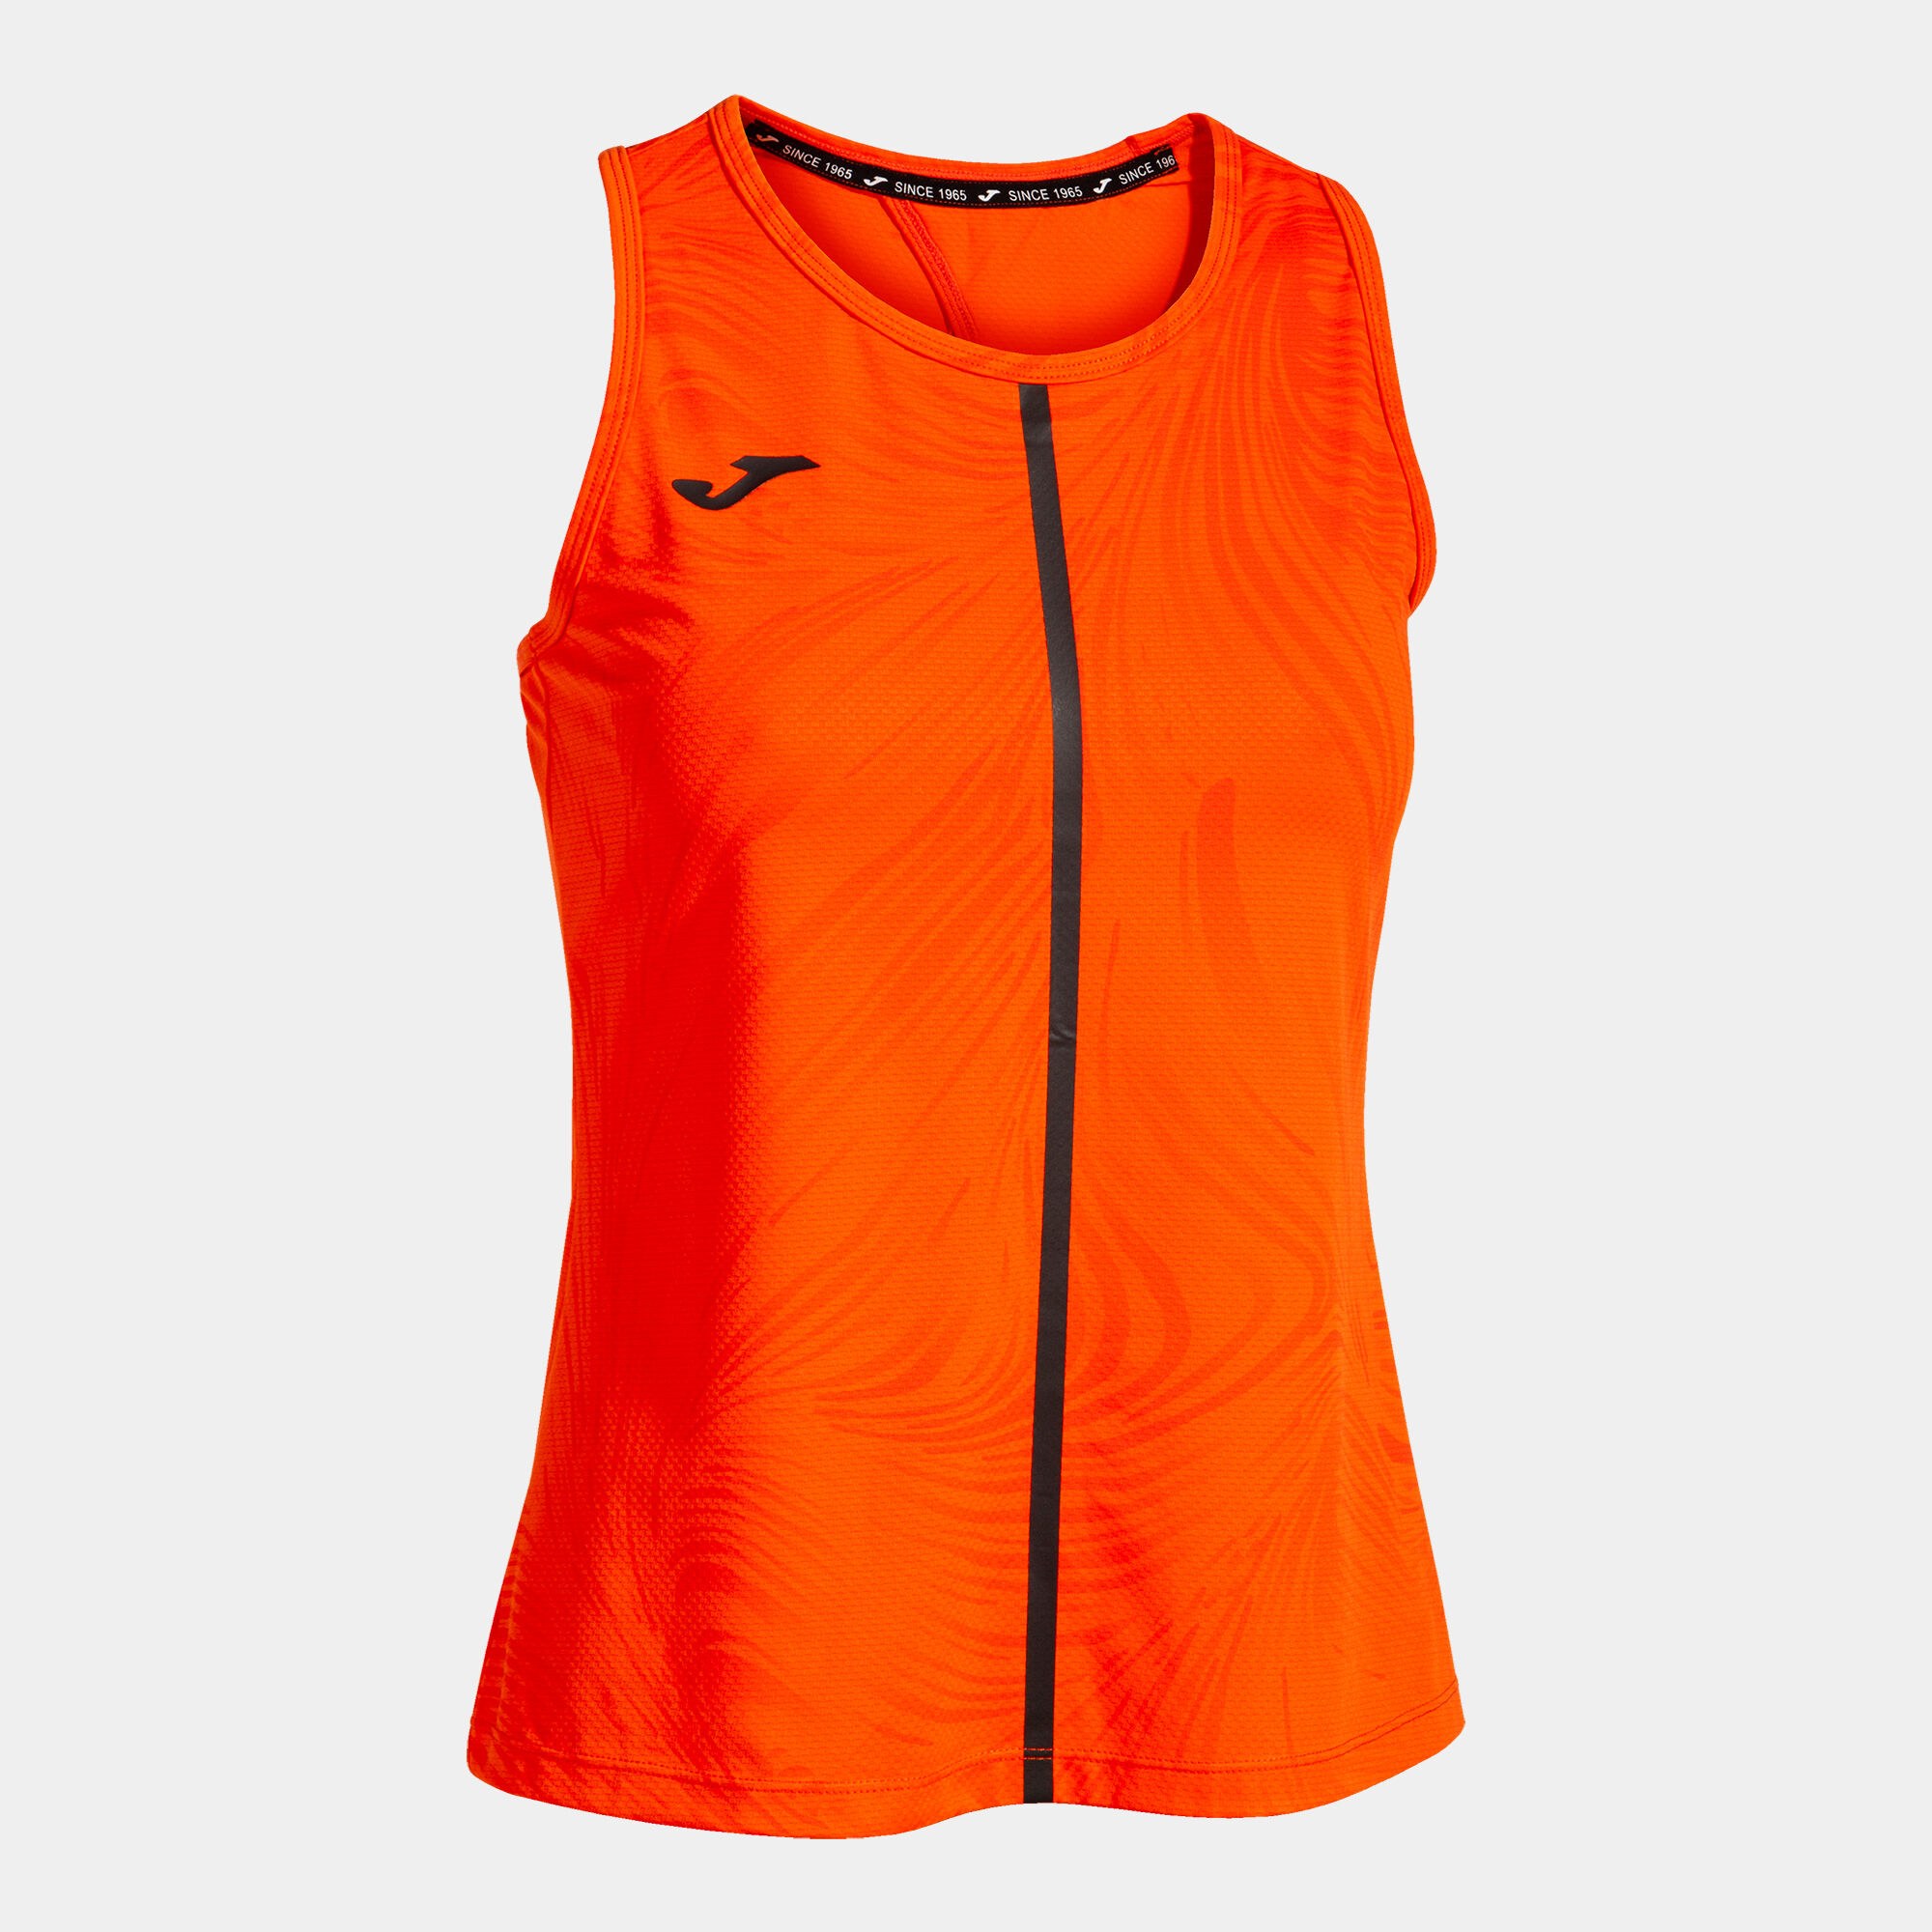 T-shirt de alça mulher Challenge laranja